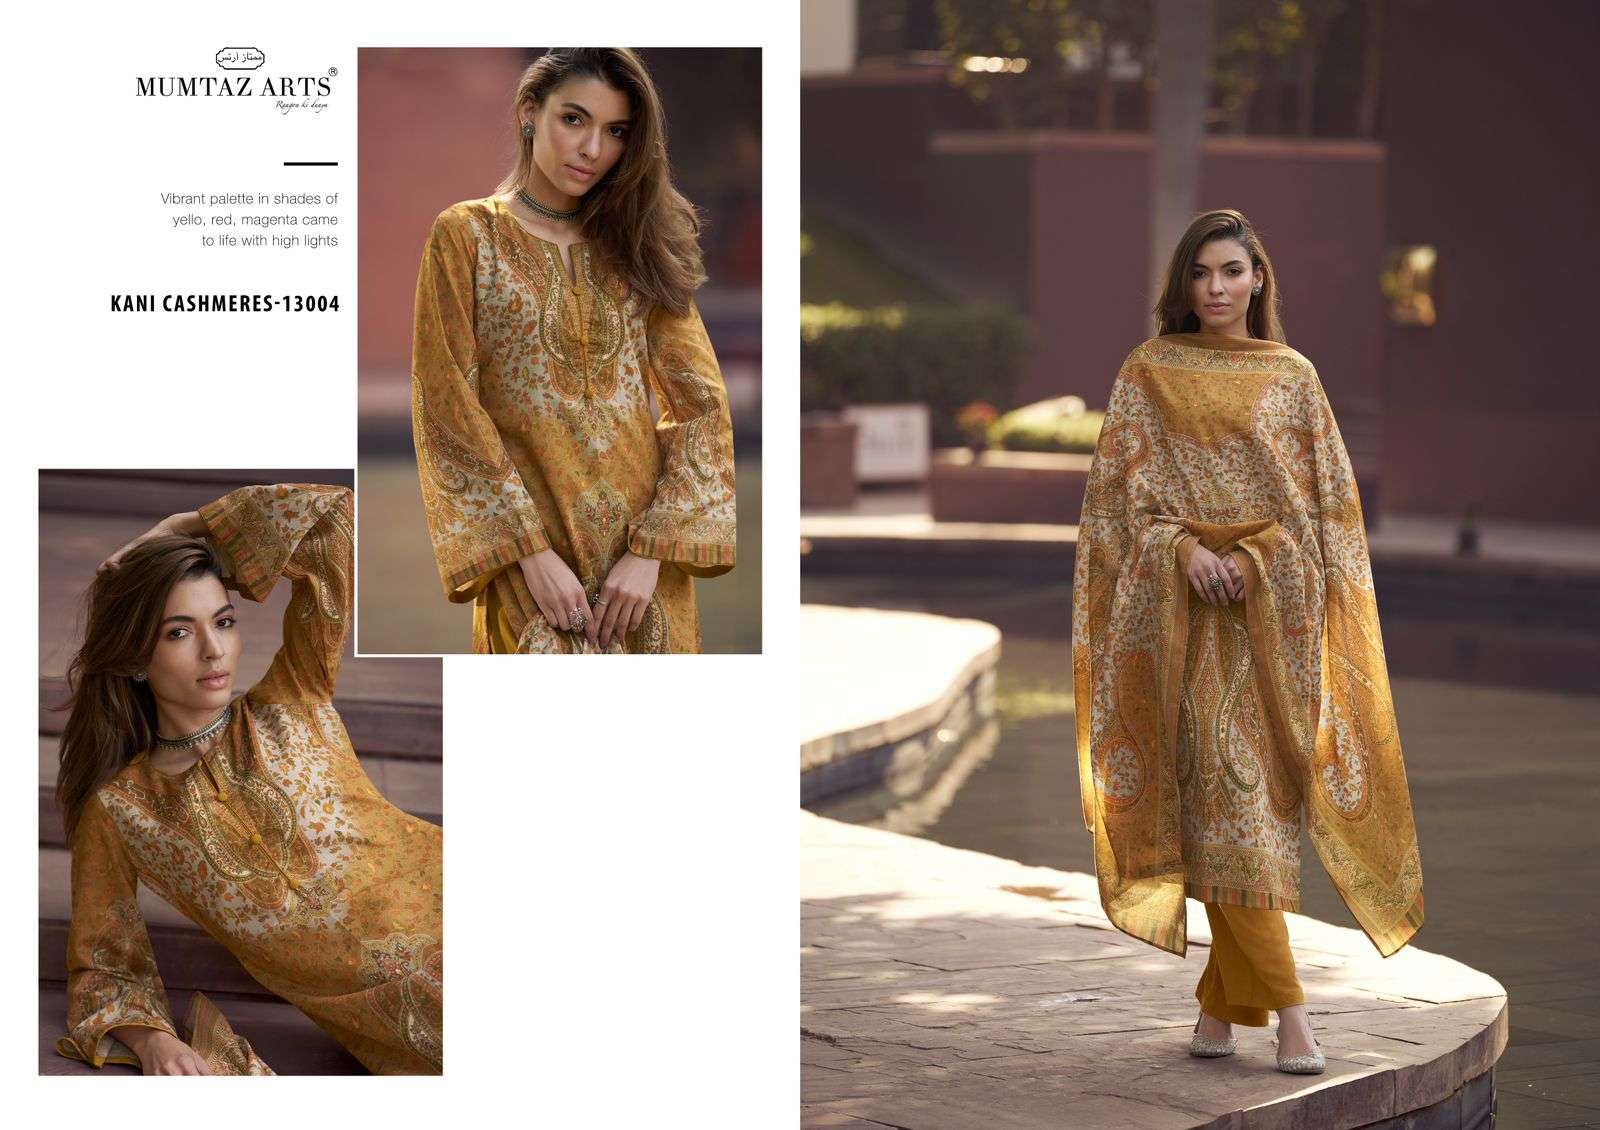 Mumtaz Kani Cashmere Vol 2 Cotton Digital Printed Dress Material Wholesale catalog